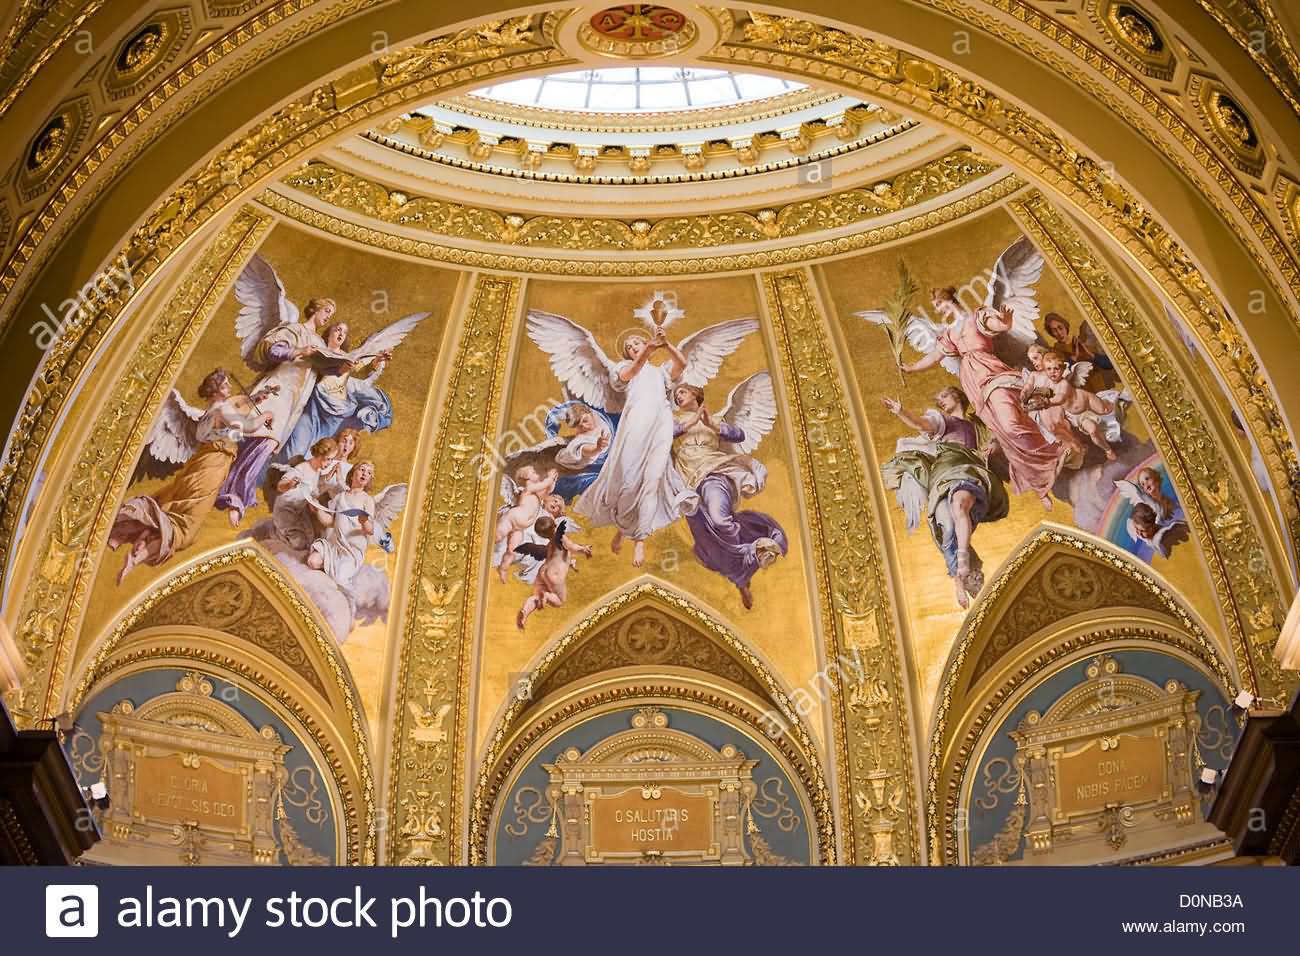 Angels And Cherubs Mosaic Inside The Saint Stephen’s Basilica